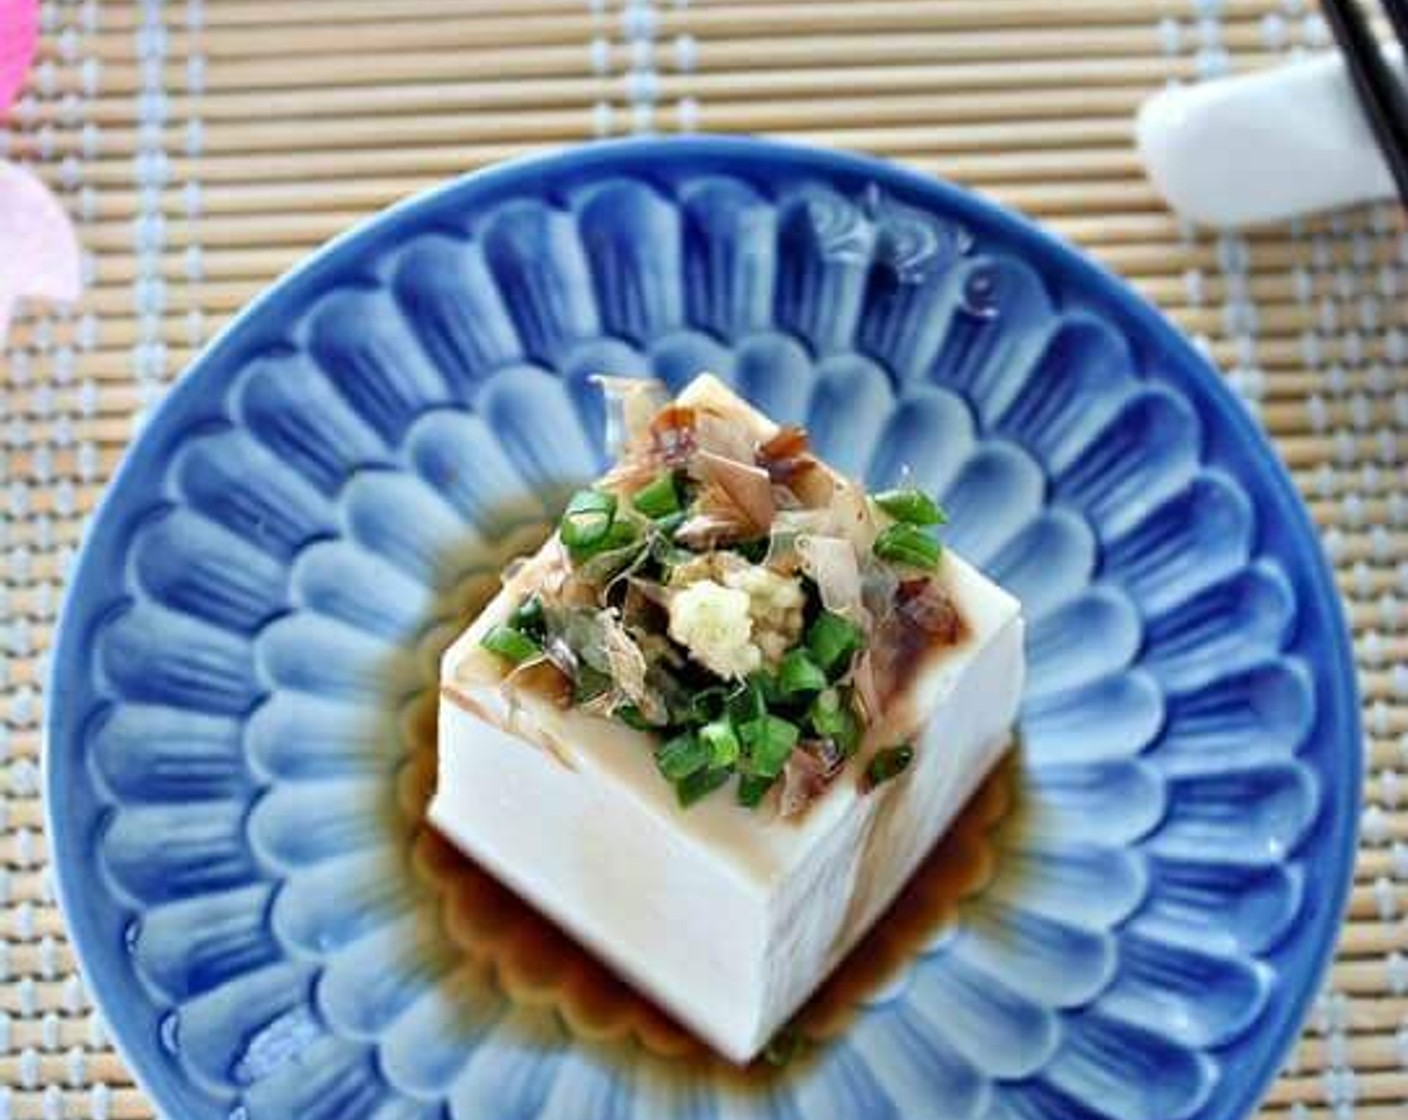 Hiyayakko (Japanese Cold Tofu)